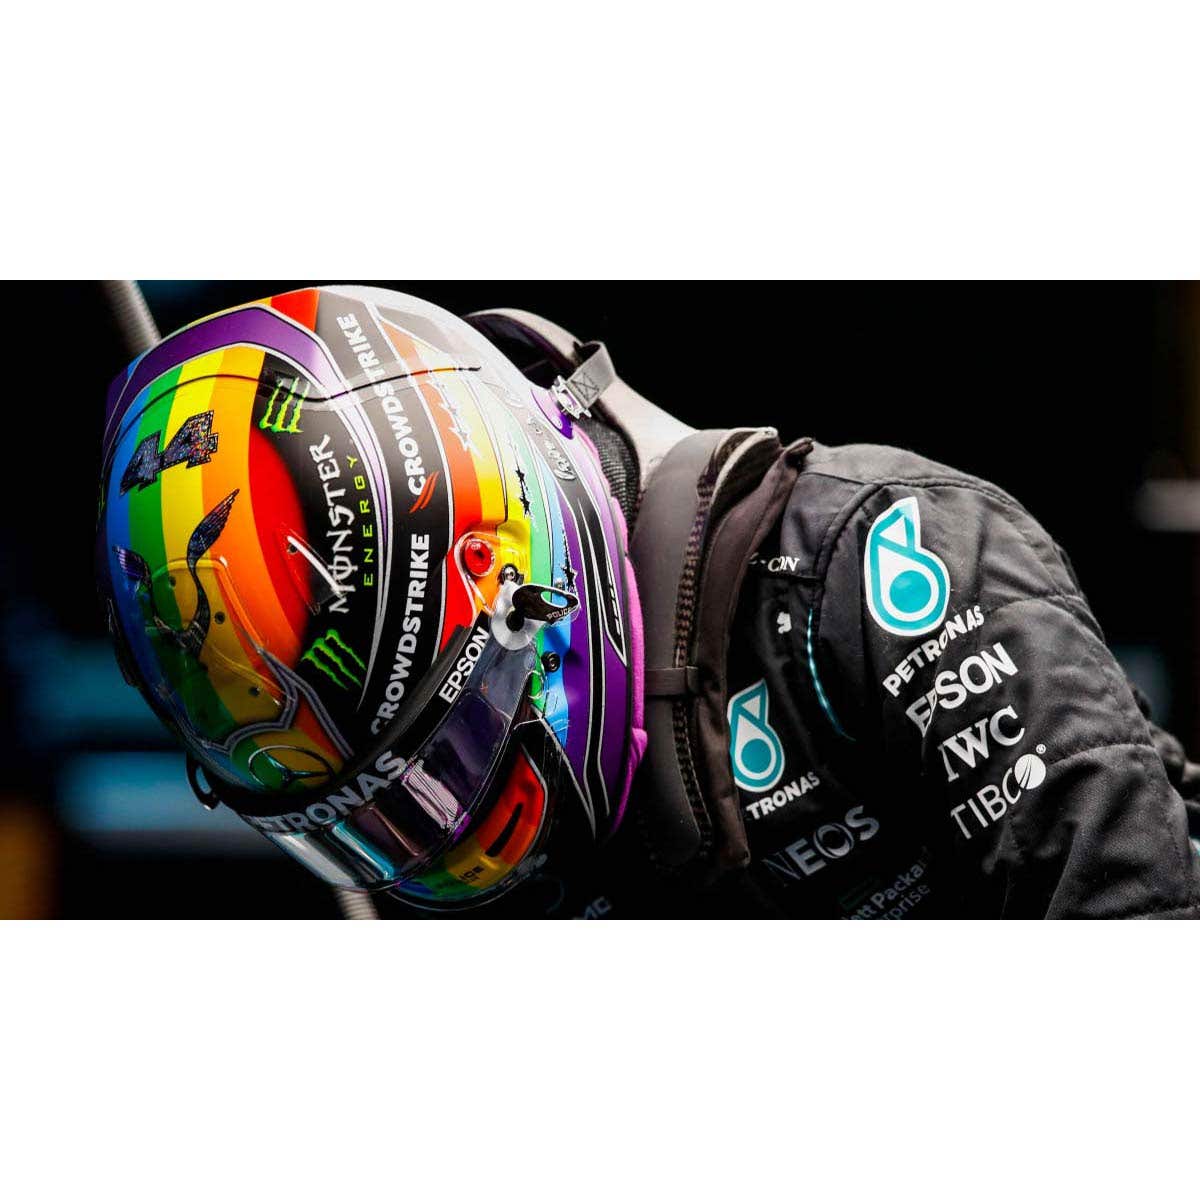 Mercedes-AMG - Abu Dhabi GP 2021 - Lewis Hamilton - 1:5 Scale Resin Model Helmet